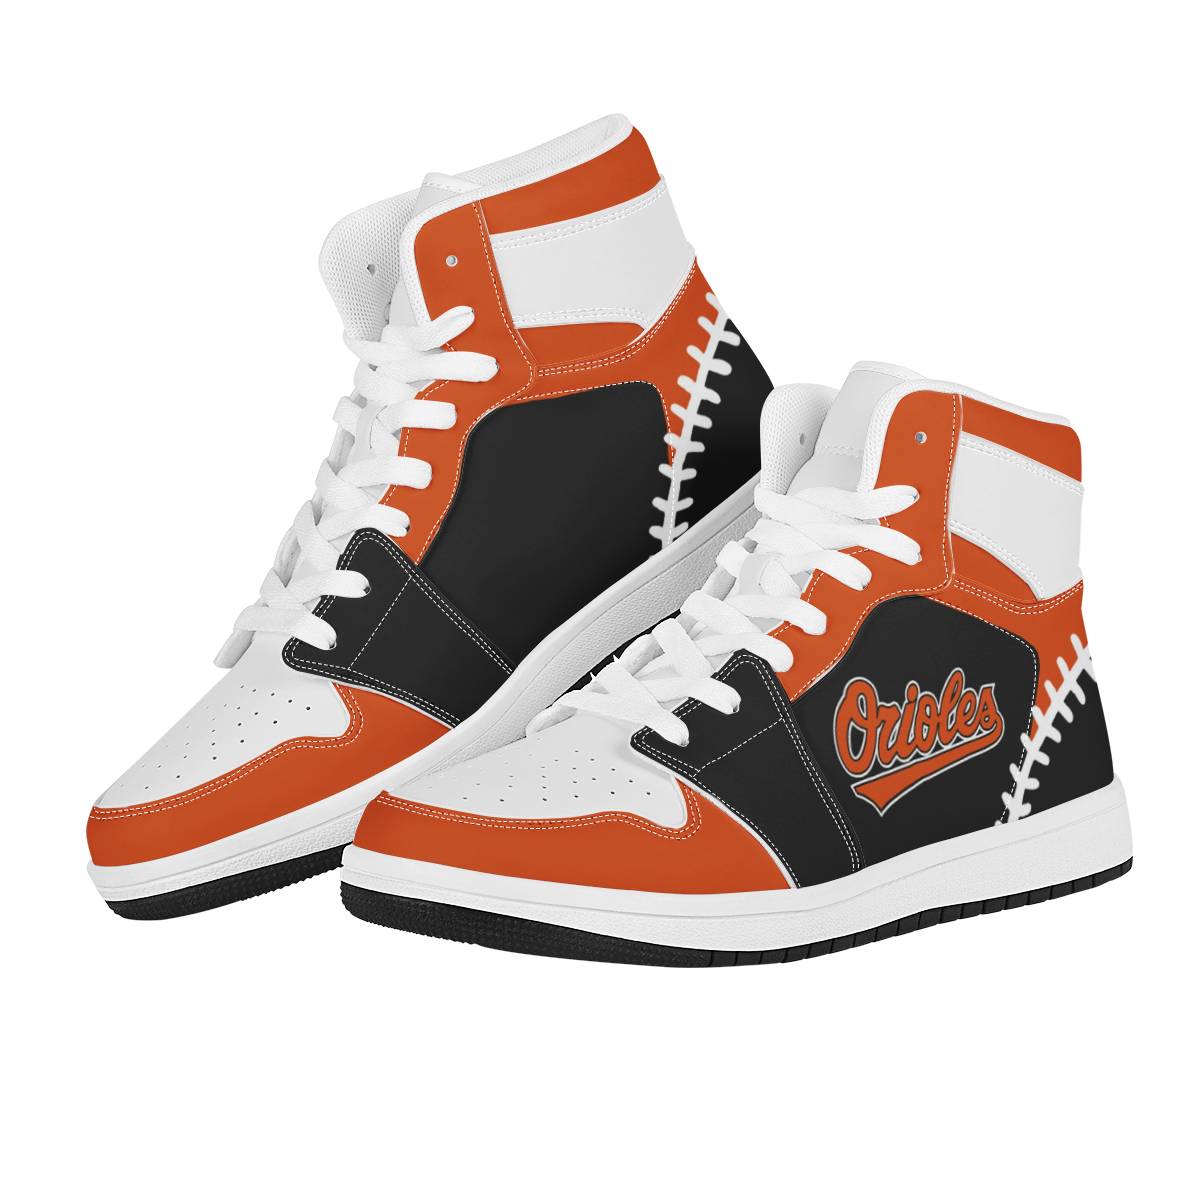 Men's Baltimore Orioles High Top Leather AJ1 Sneakers 002